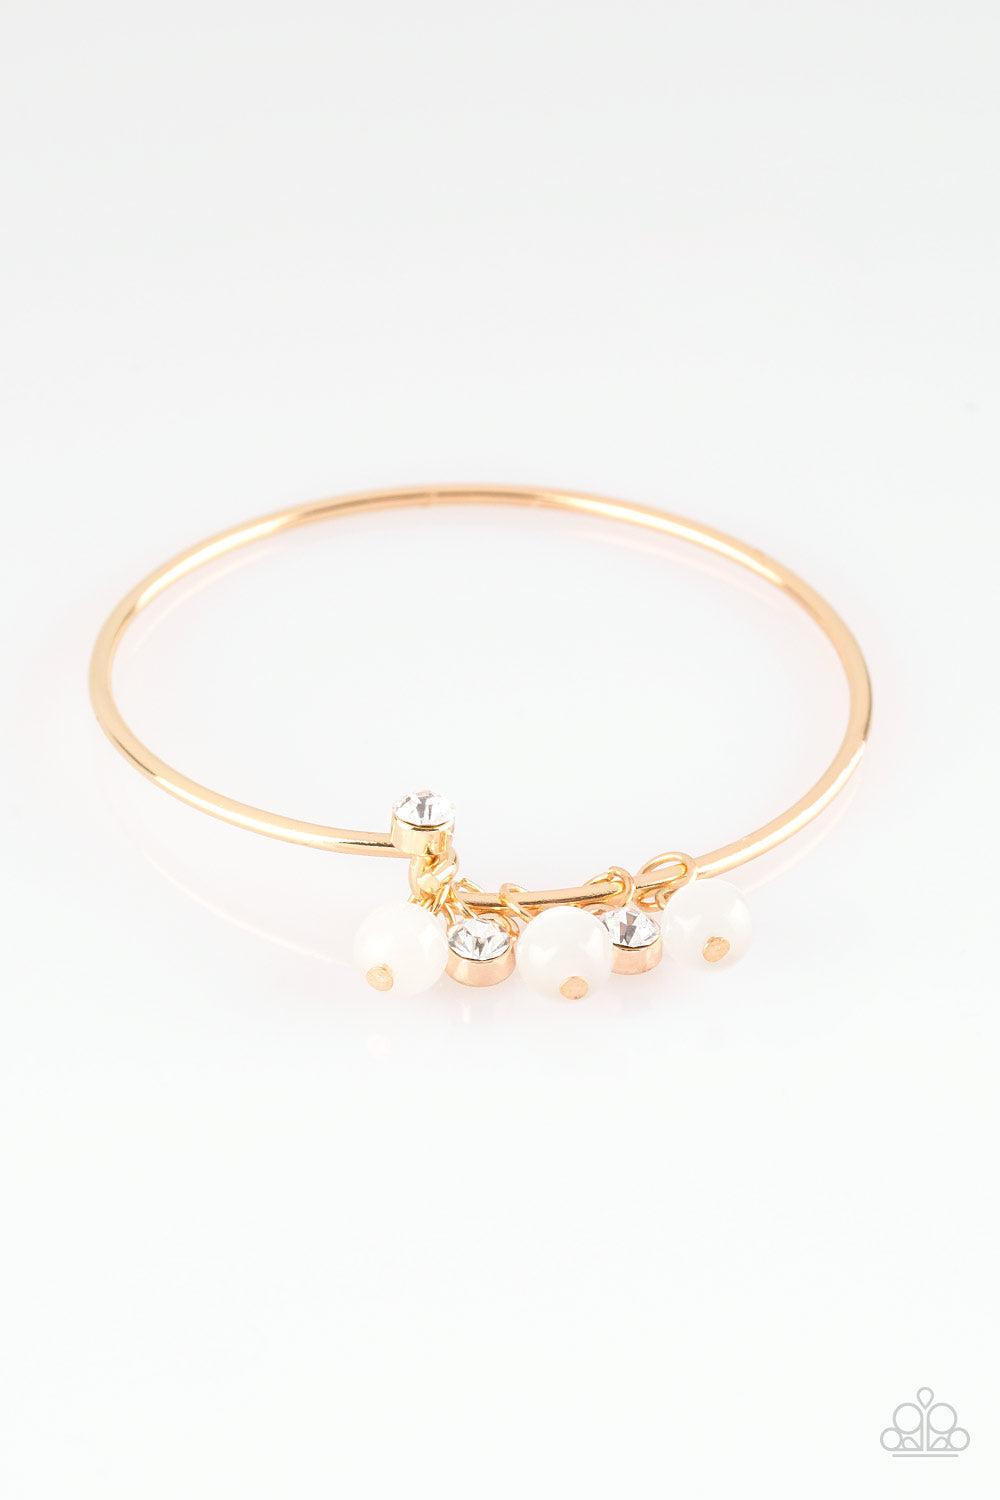 Marine Melody Gold Bracelet - Paparazzi Accessories- lightbox - CarasShop.com - $5 Jewelry by Cara Jewels